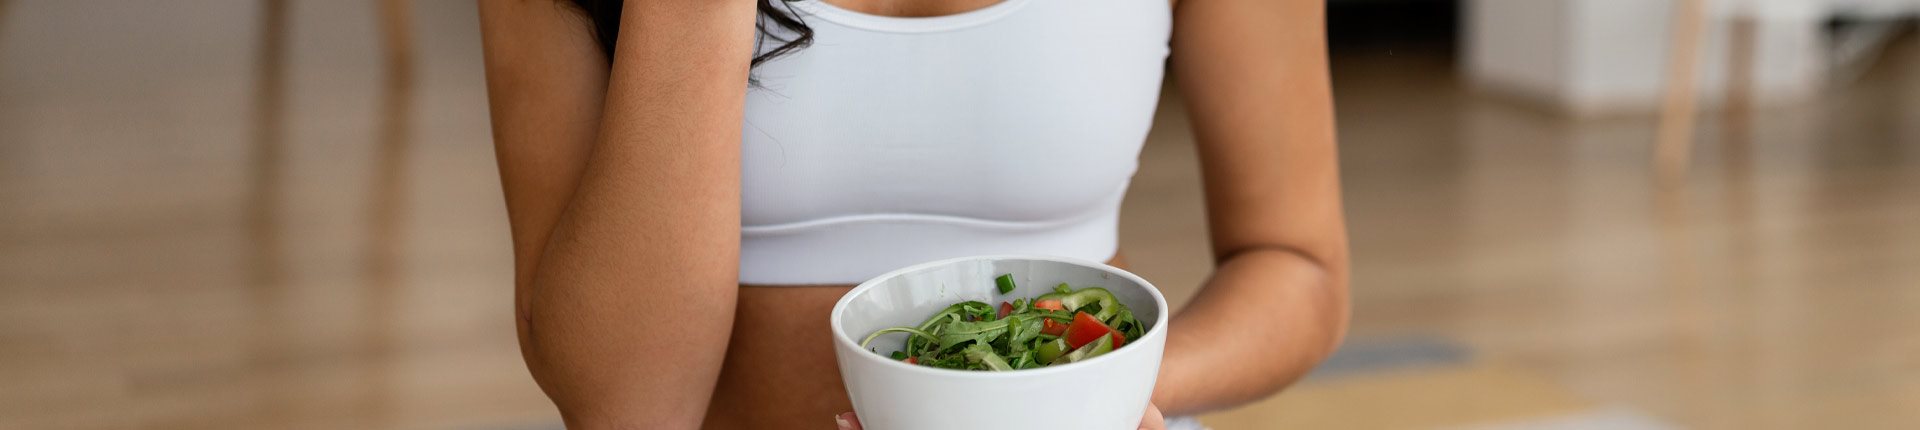 W jaki sposób diety wegańska i wegetariańska pomagają schudnąć?